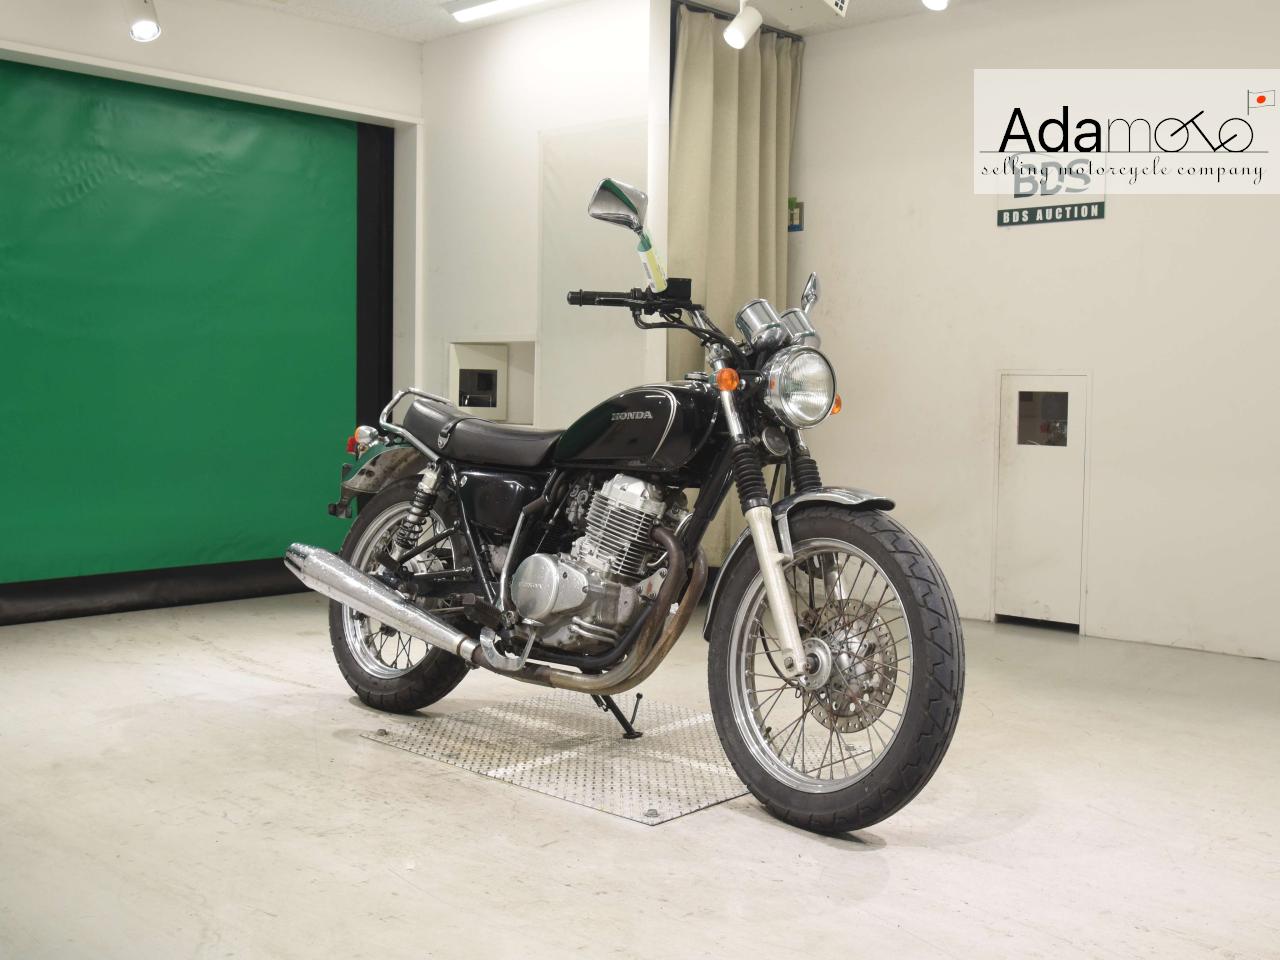 Honda CB400SS E - Adamoto - Motorcycles from Japan